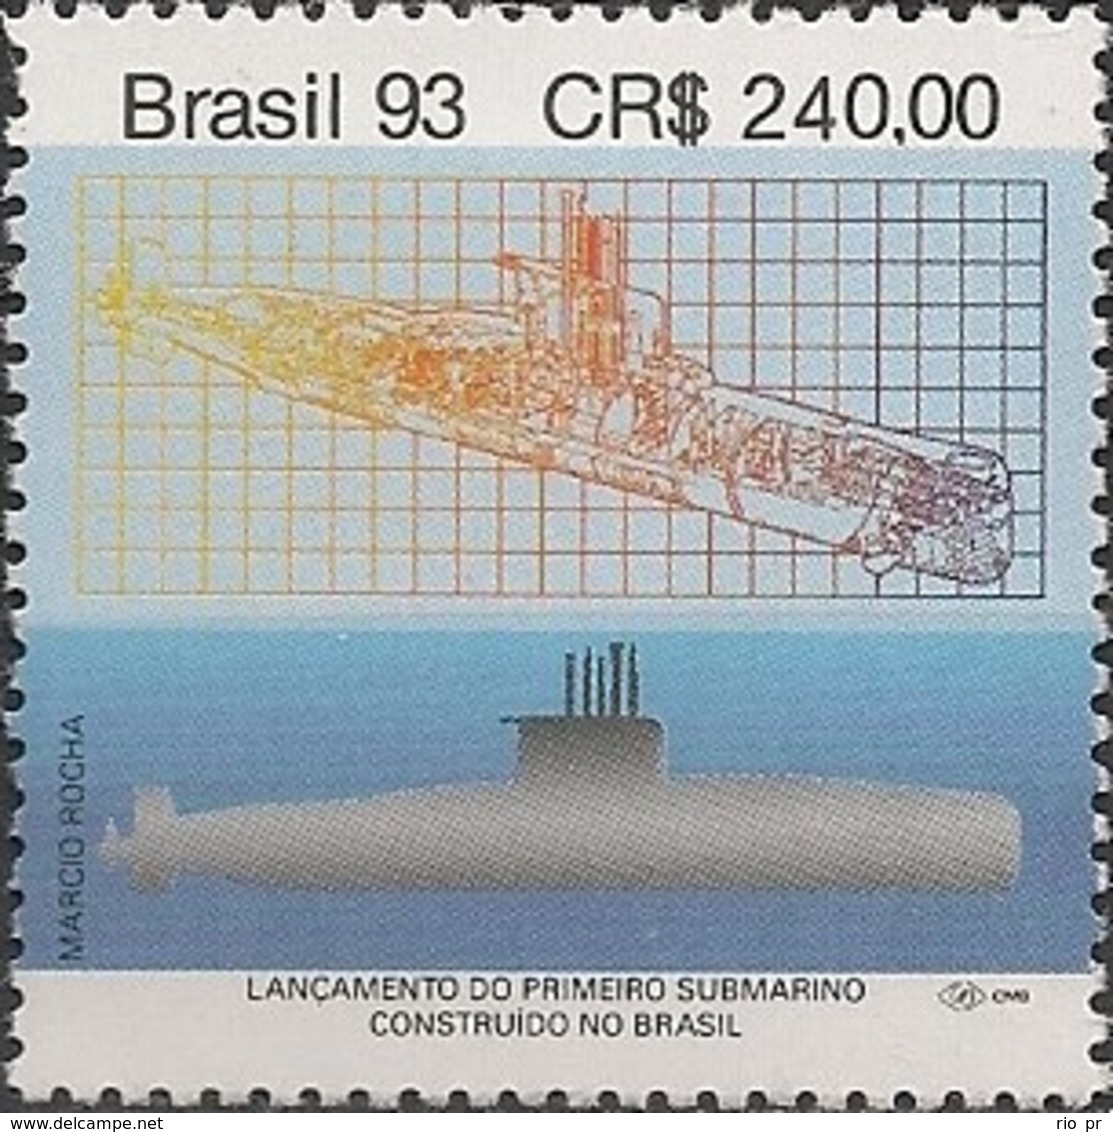 BRAZIL - LAUNCHING OF 1st BRAZILIAN-BUILT SUBMARINE "TAMOIO" 1993 - MNH - Sous-marins